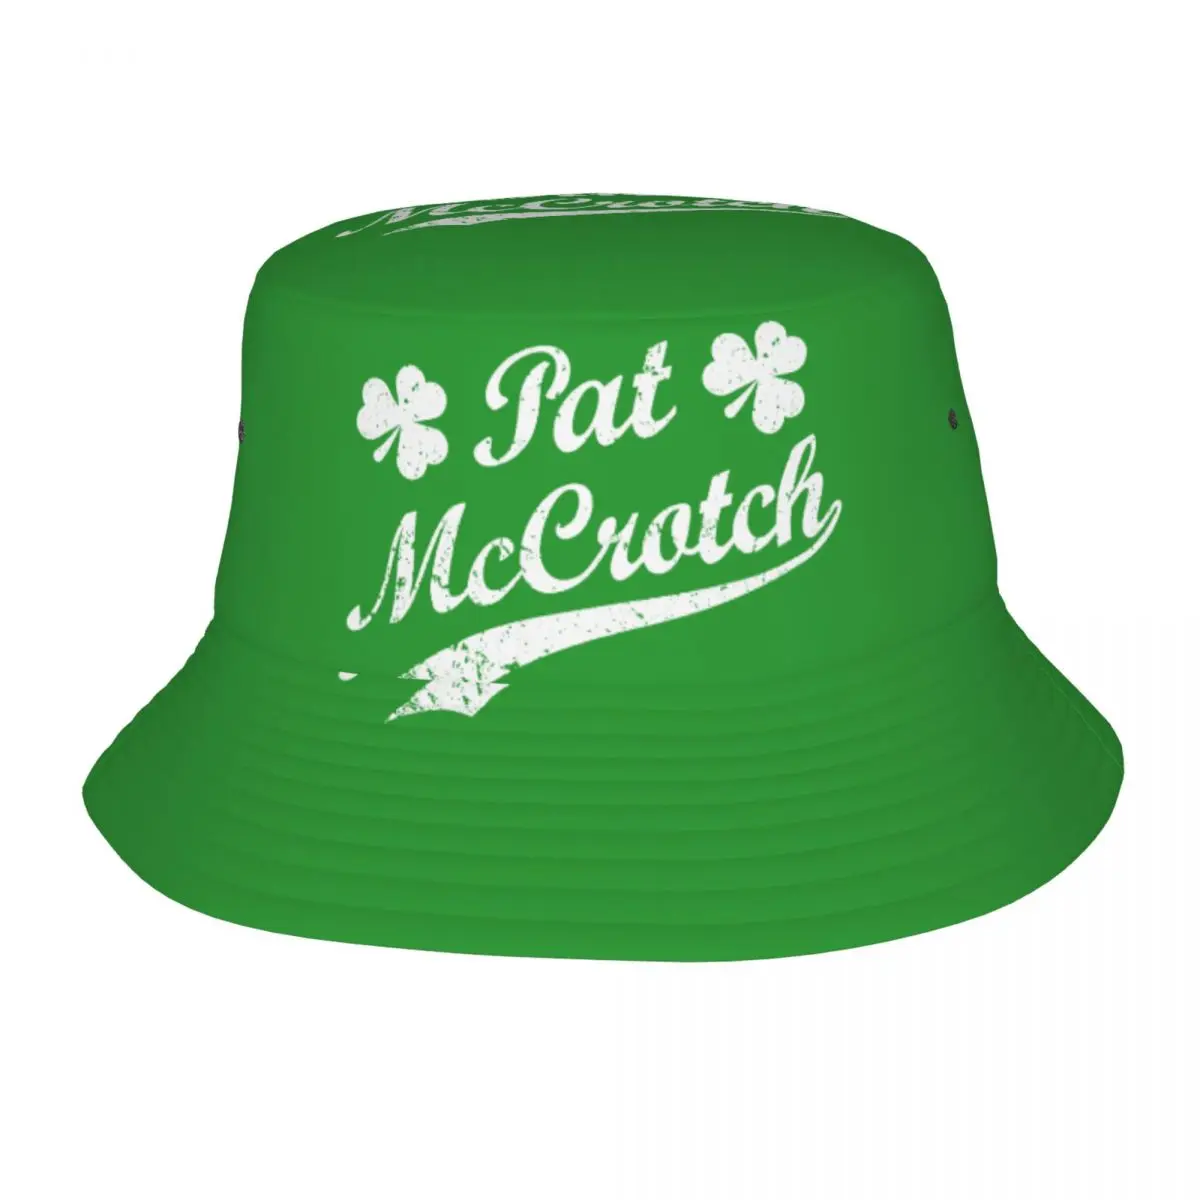 

St. Patrick's Day Pat McCrotch Bucket Hats Outdoor Irish Name Saint Paddy Fishing Fisherman Hat Vocation Getaway Headwear